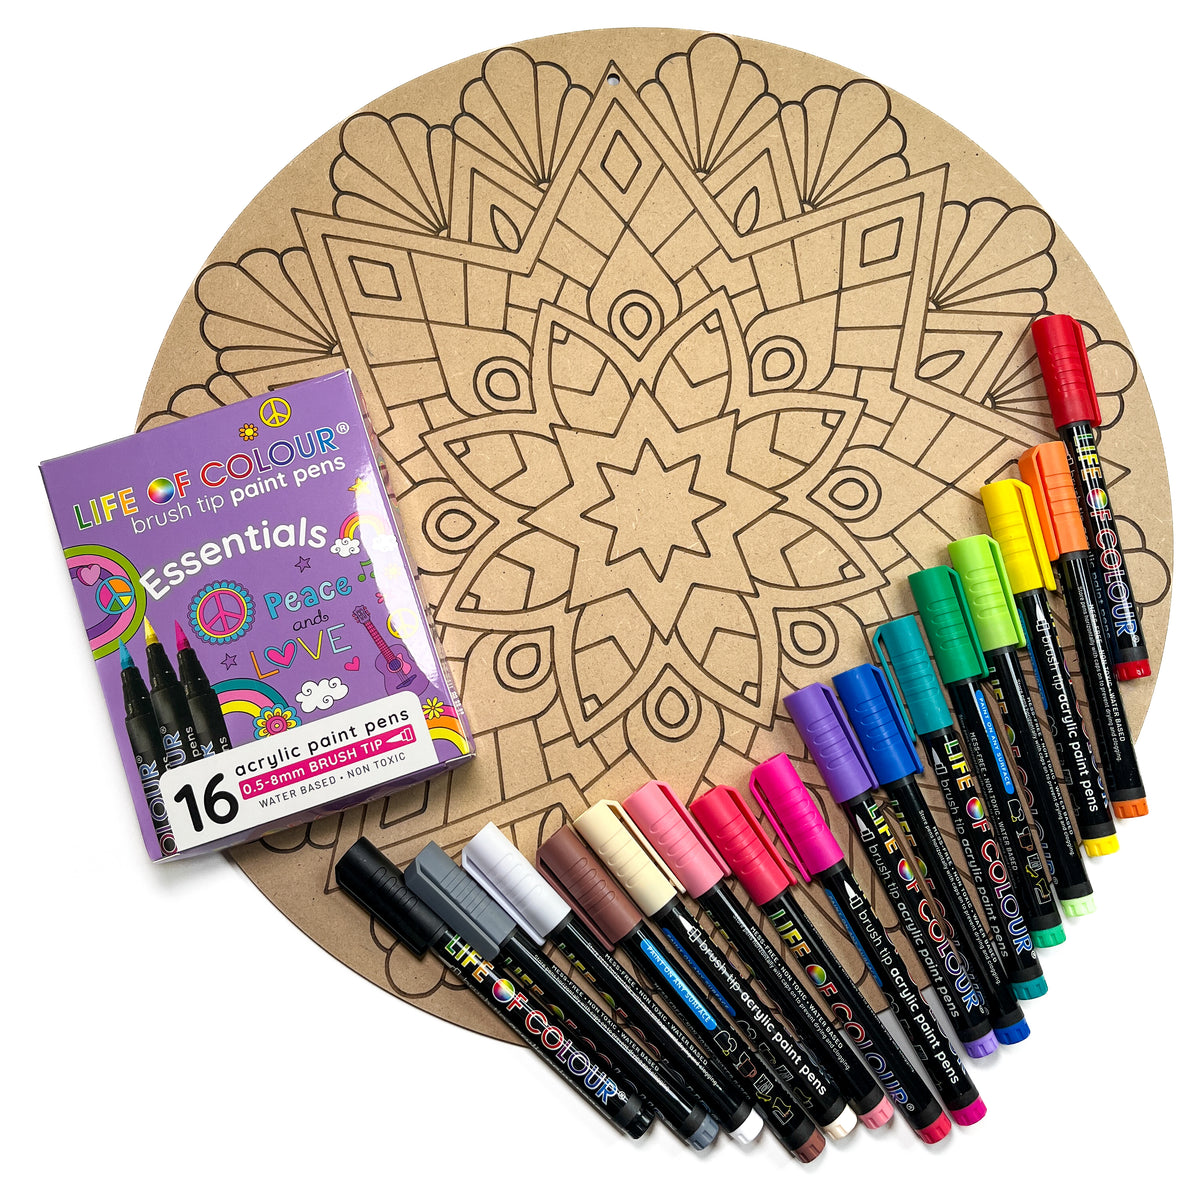 Life of Colour Mandala Painting Kit - The Beach (Essentials)